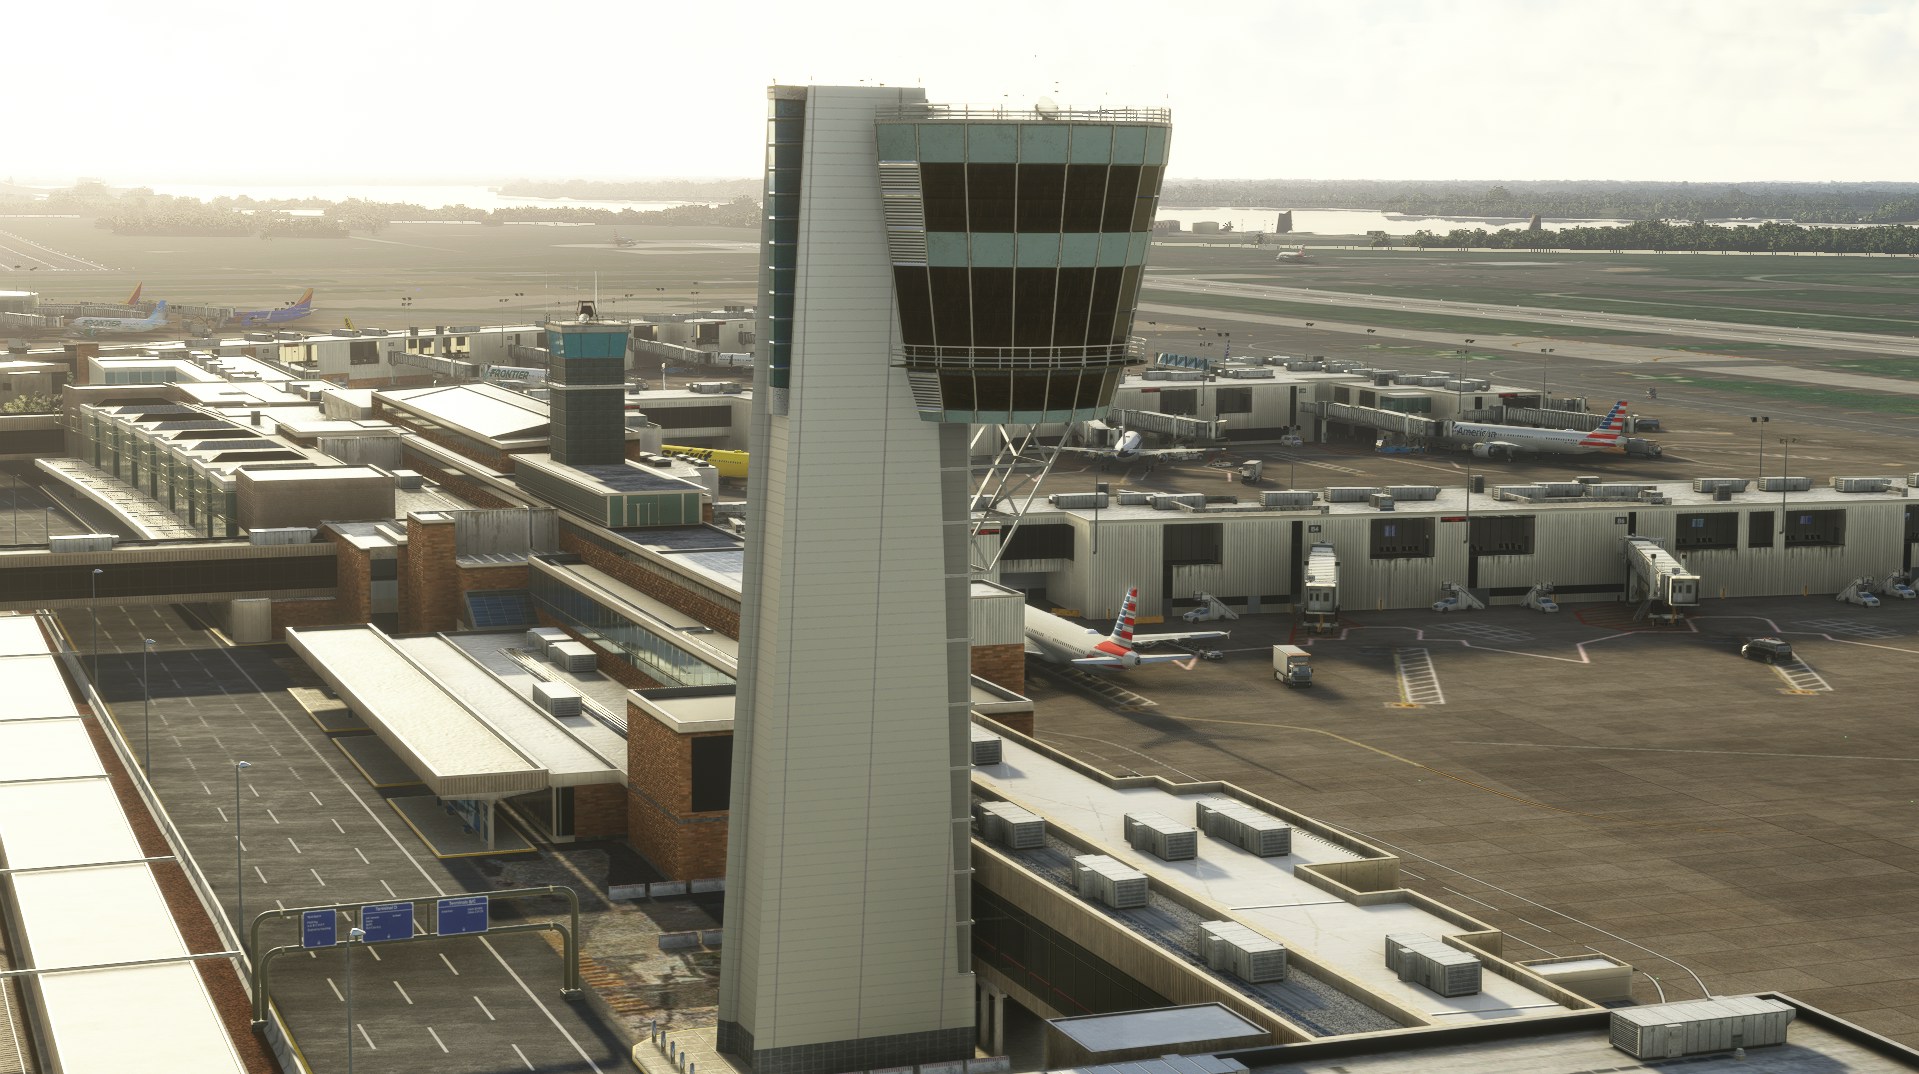 DominicDesignTeam Releases Philadelphia Airport for MSFS